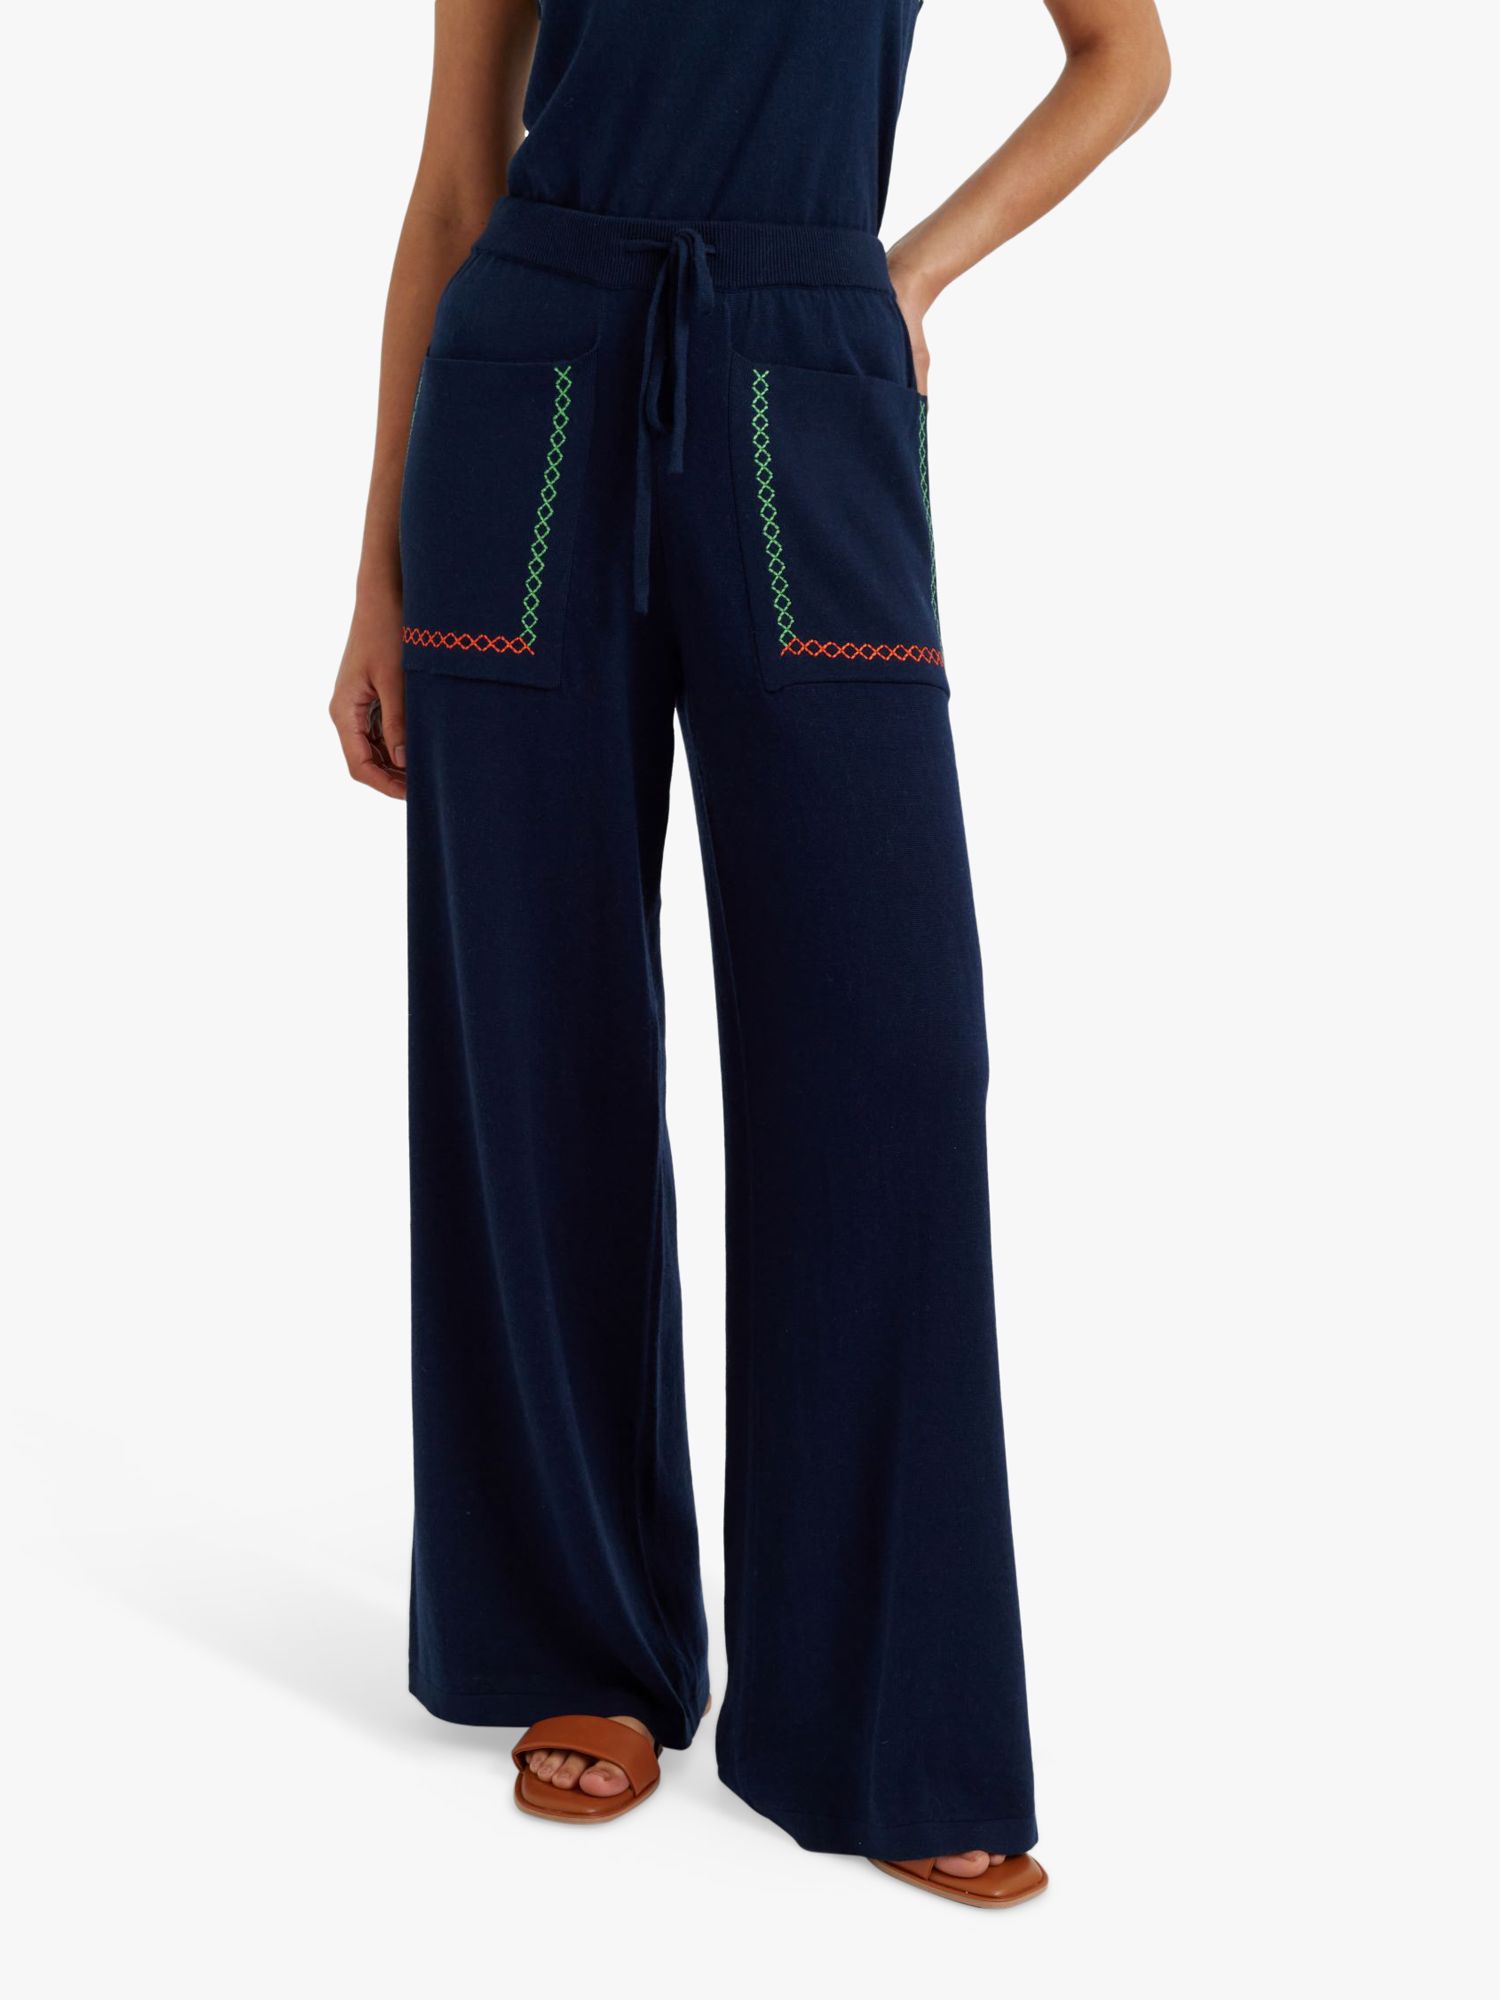 Chinti & Parker Santorini Cotton Cashmere Blend Trousers, Navy/Green/Orange, XS